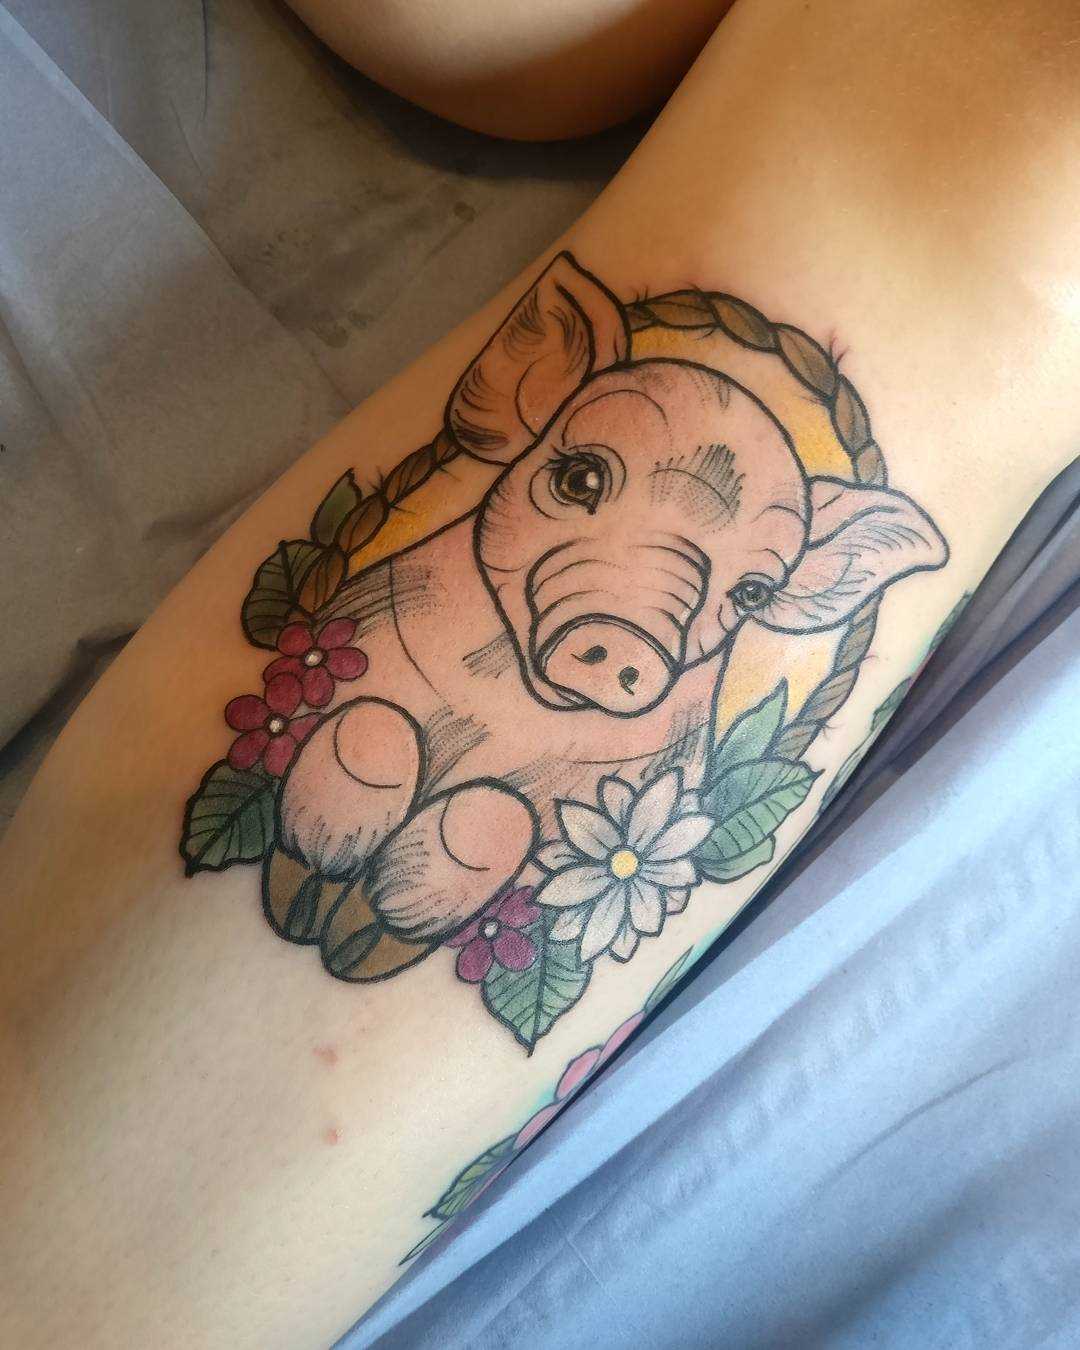 Linda tatuagem de porco sobre a perna da menina